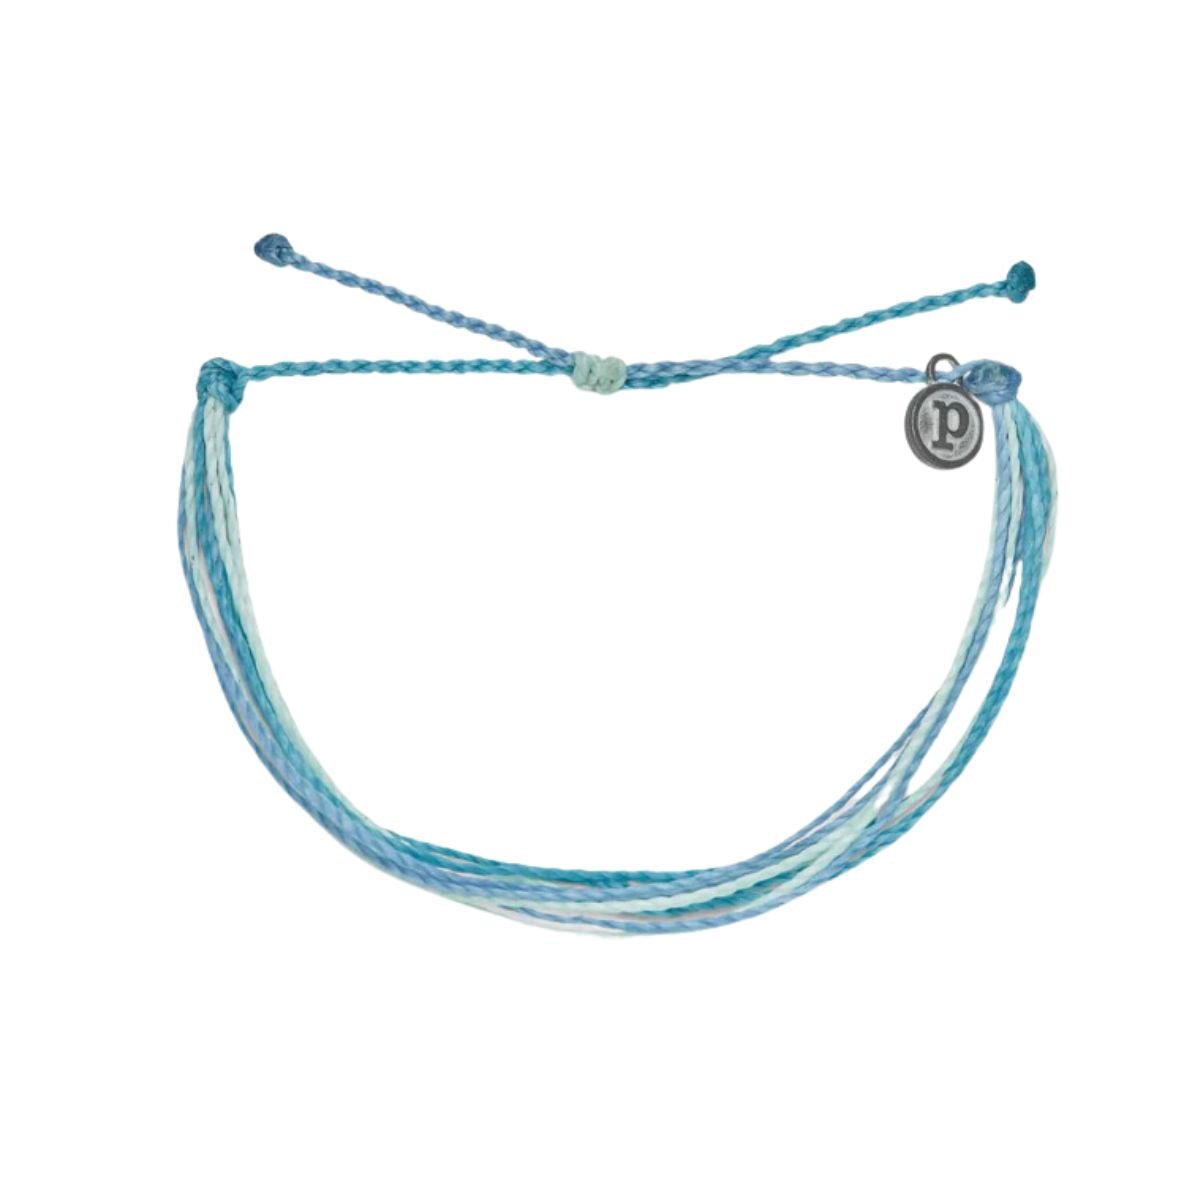 Pura Vida Original Bracelet in Blue Swell - BoardCo